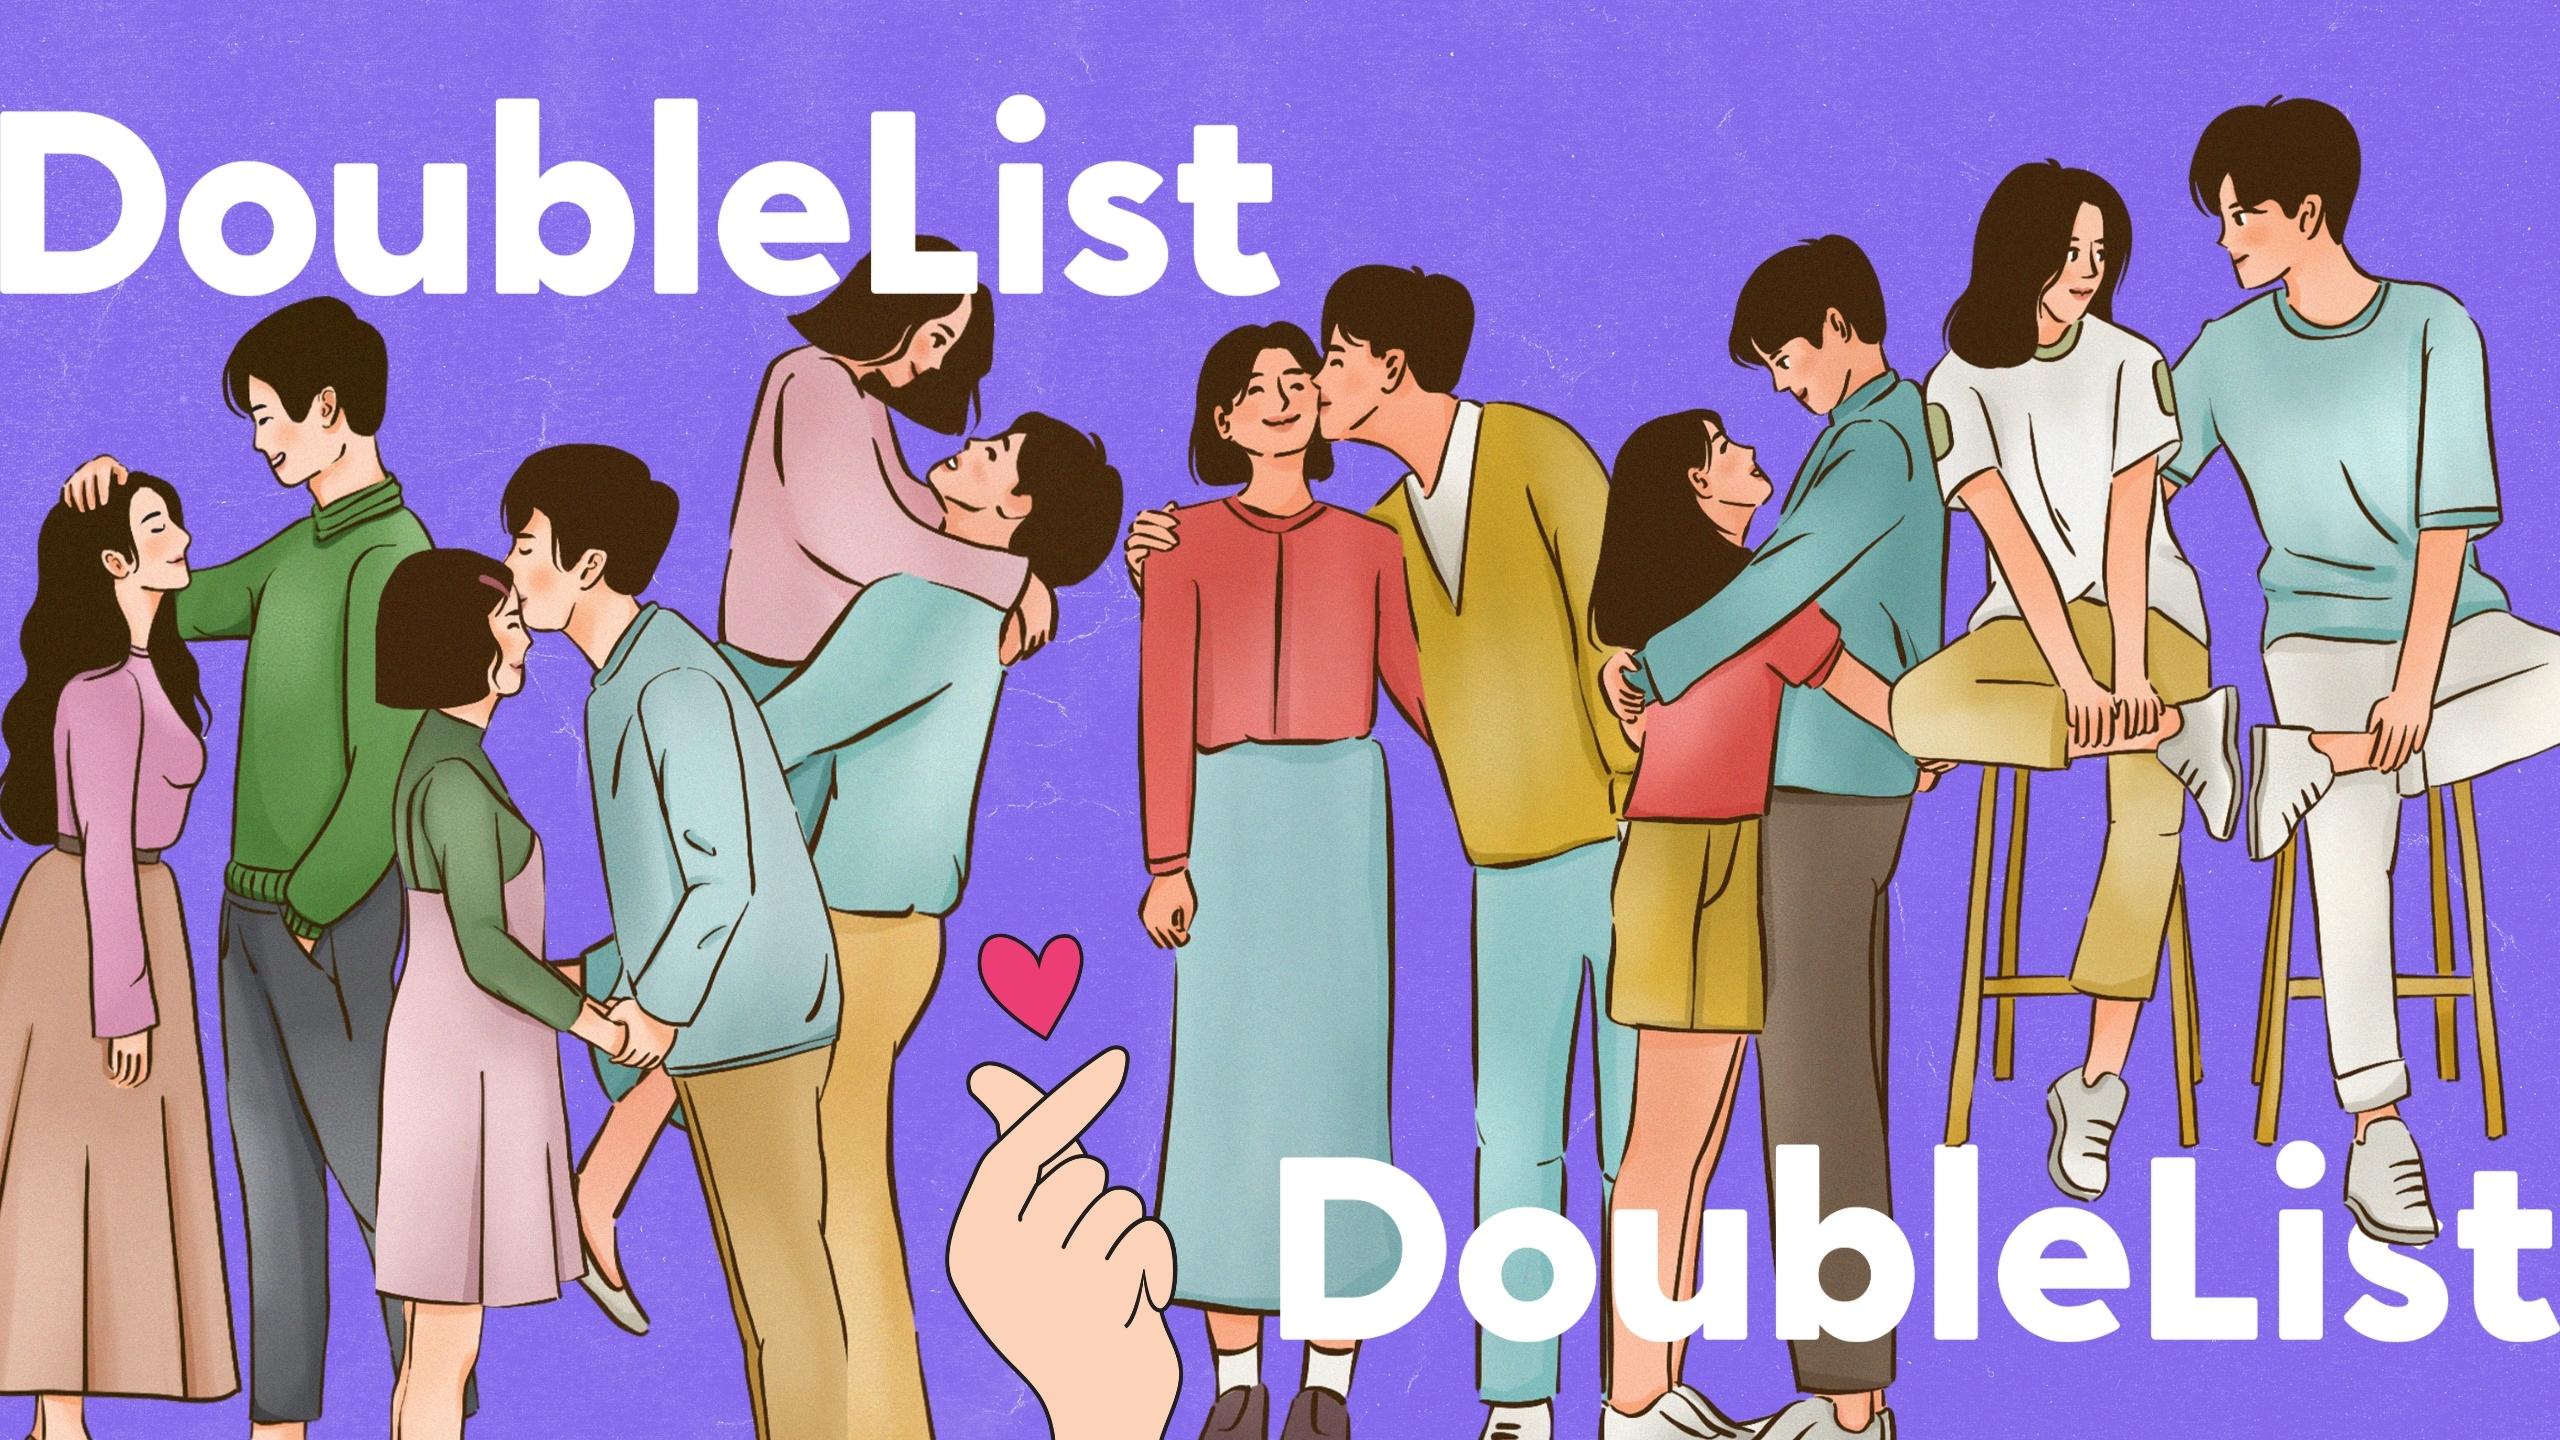 7. Doublelist - Korean Inspired